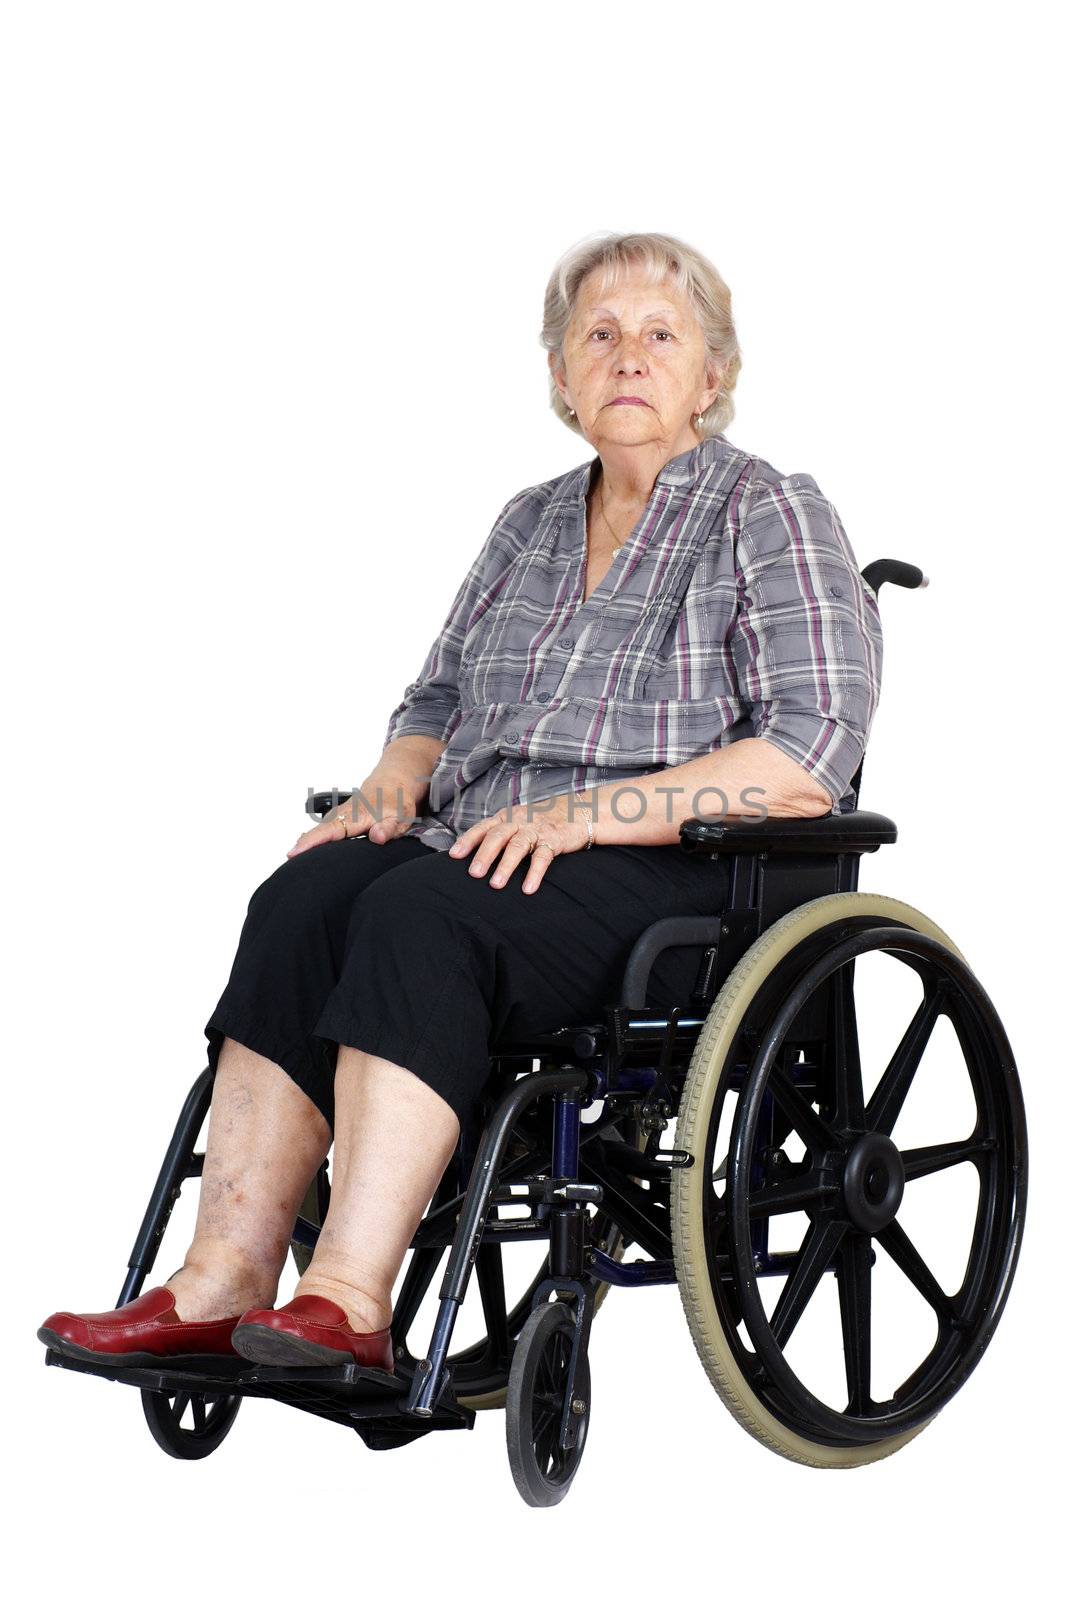 Unhappy senior woman in wheelchair by Mirage3